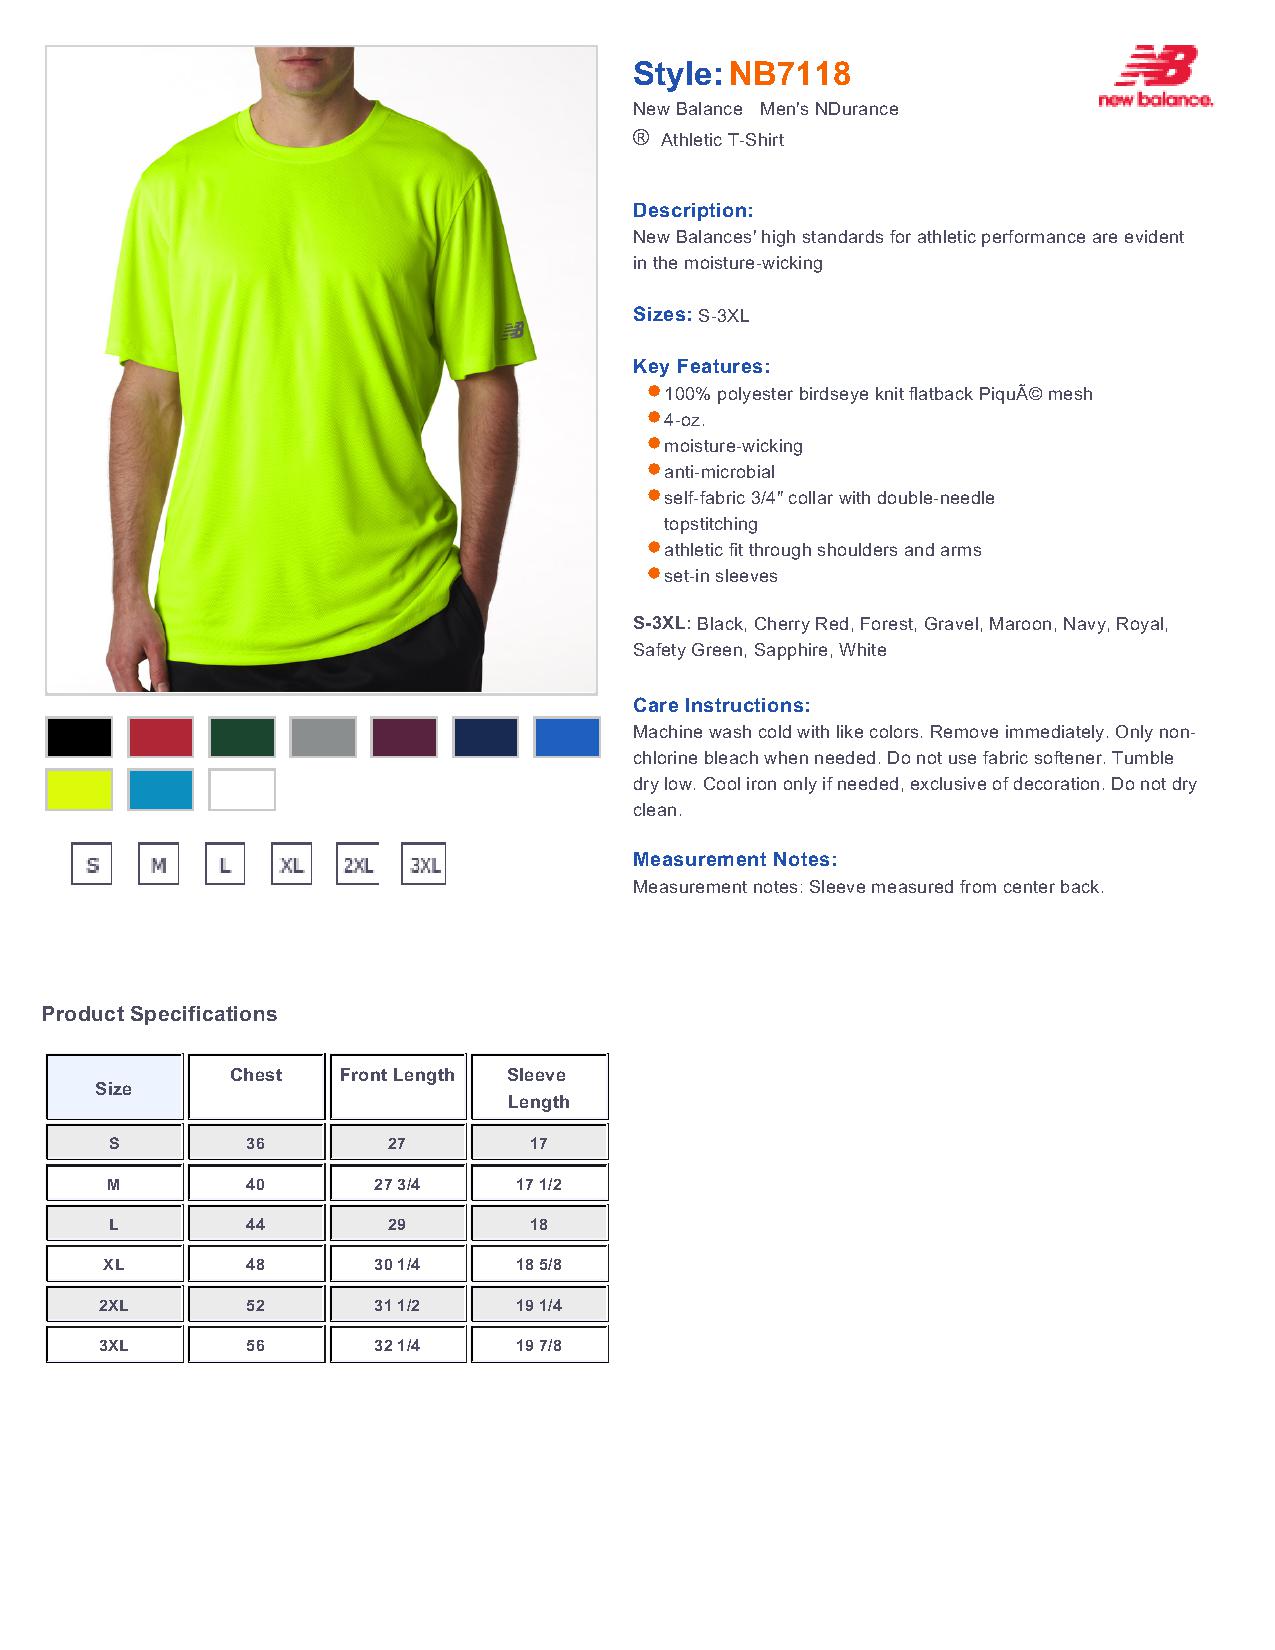 New Balance NB7118 - Men's Ndurance Athletic T-Shirt $7.01 - Men's T-Shirts